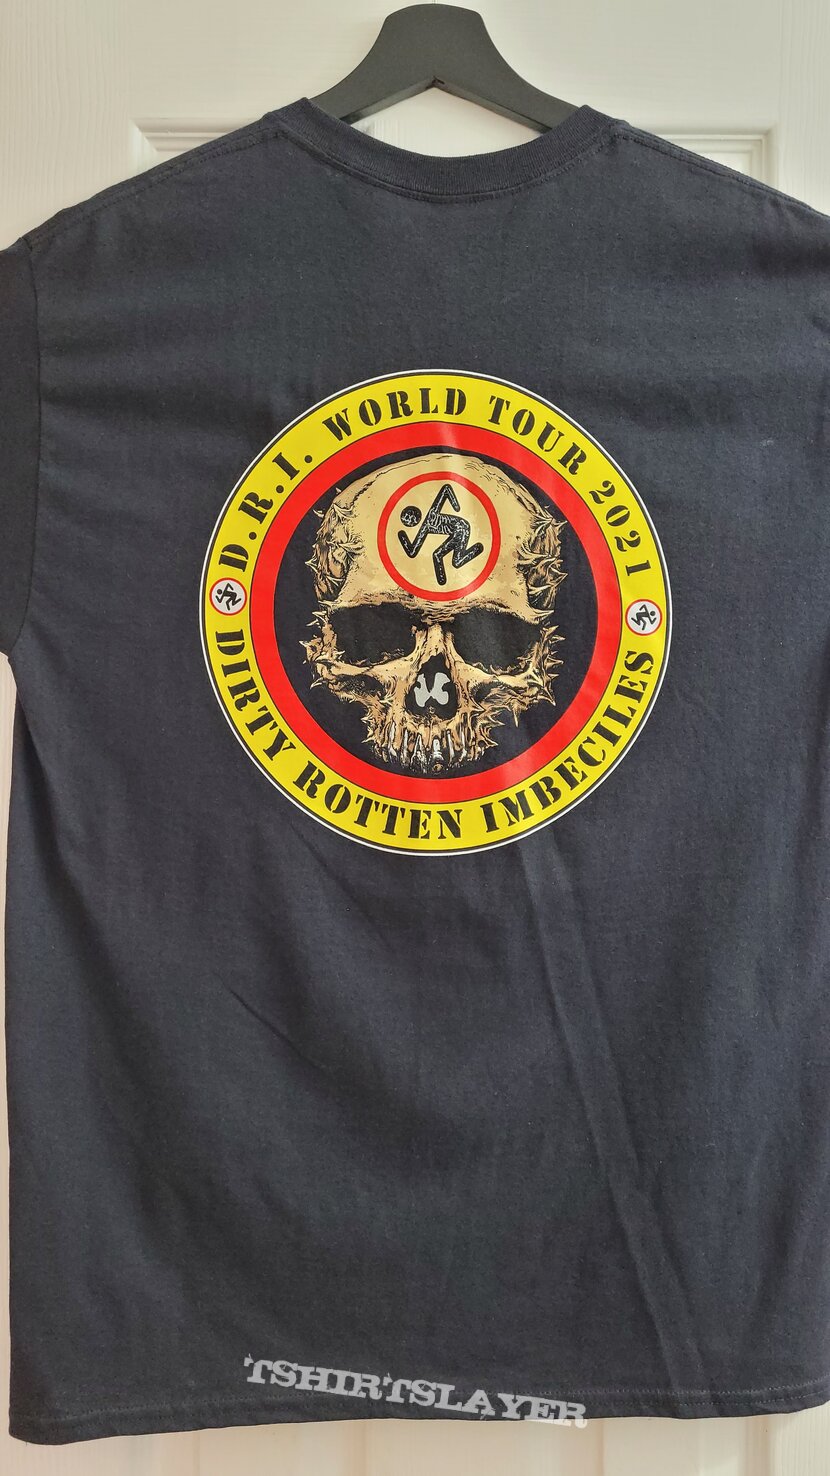 Dirty Rotten Imbeciles (D.R.I.) 2021 U.S.A Tour Shirt